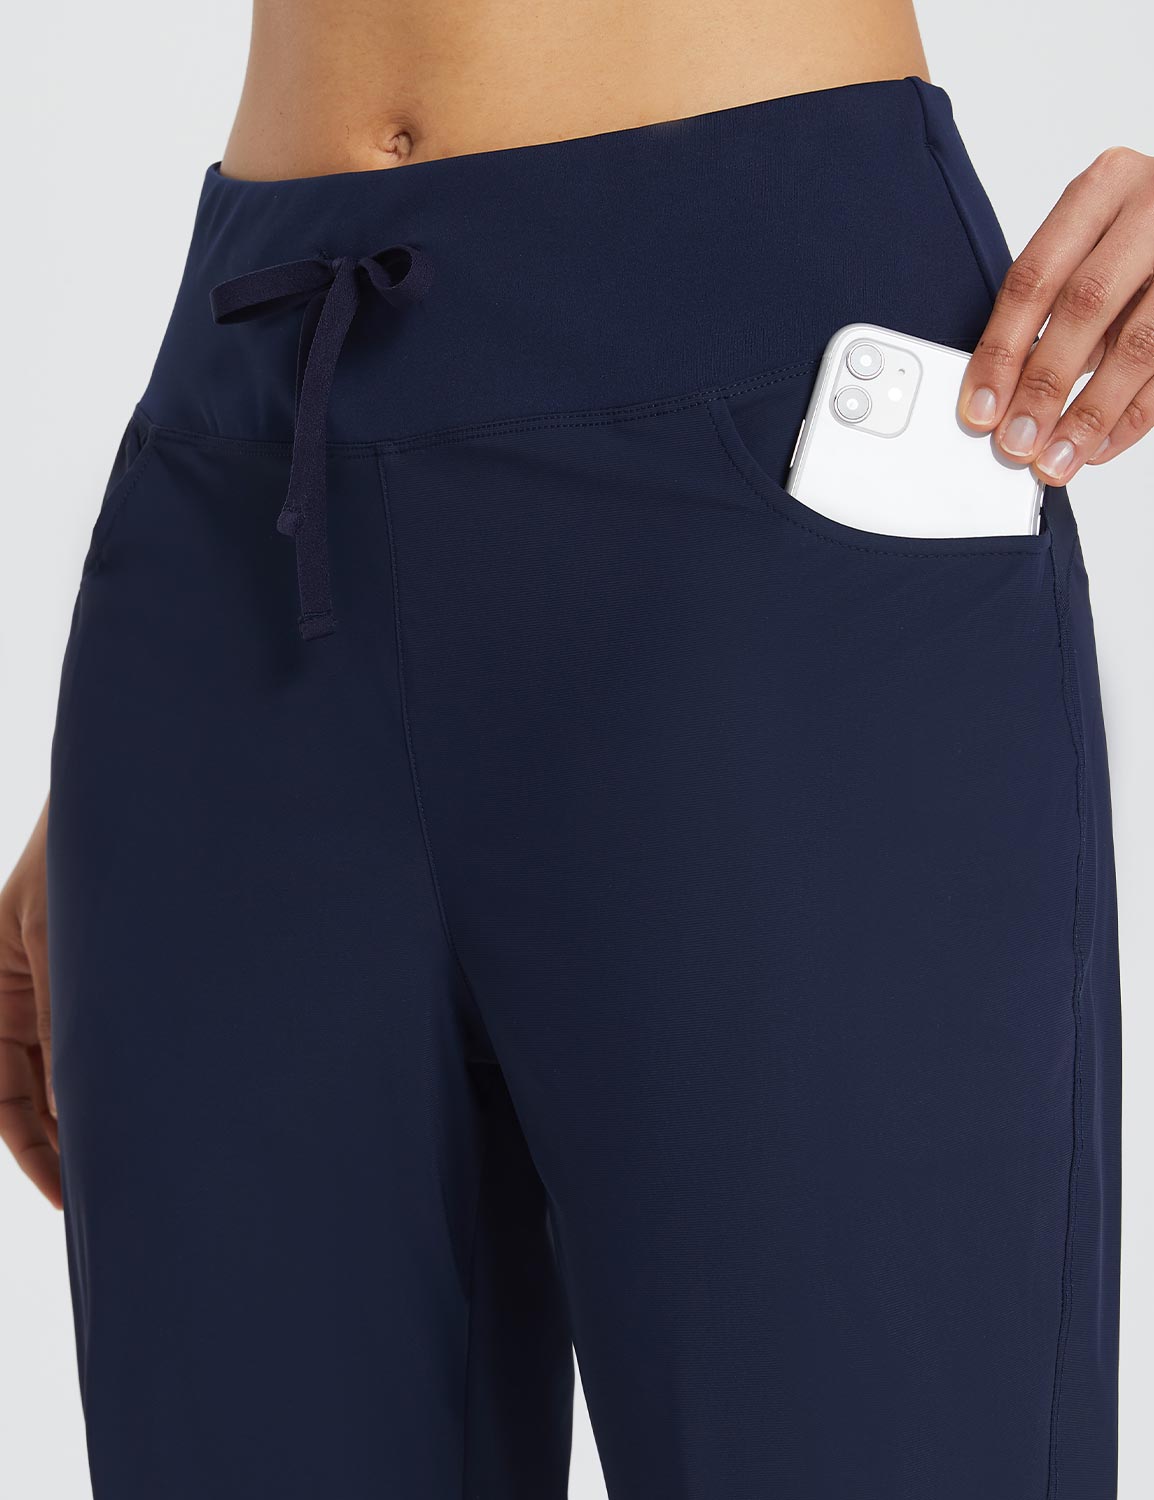 BALEAF Plus Size Capri Pants for Women High Waist Pull on Pockets Casual  Summer Navy XX-